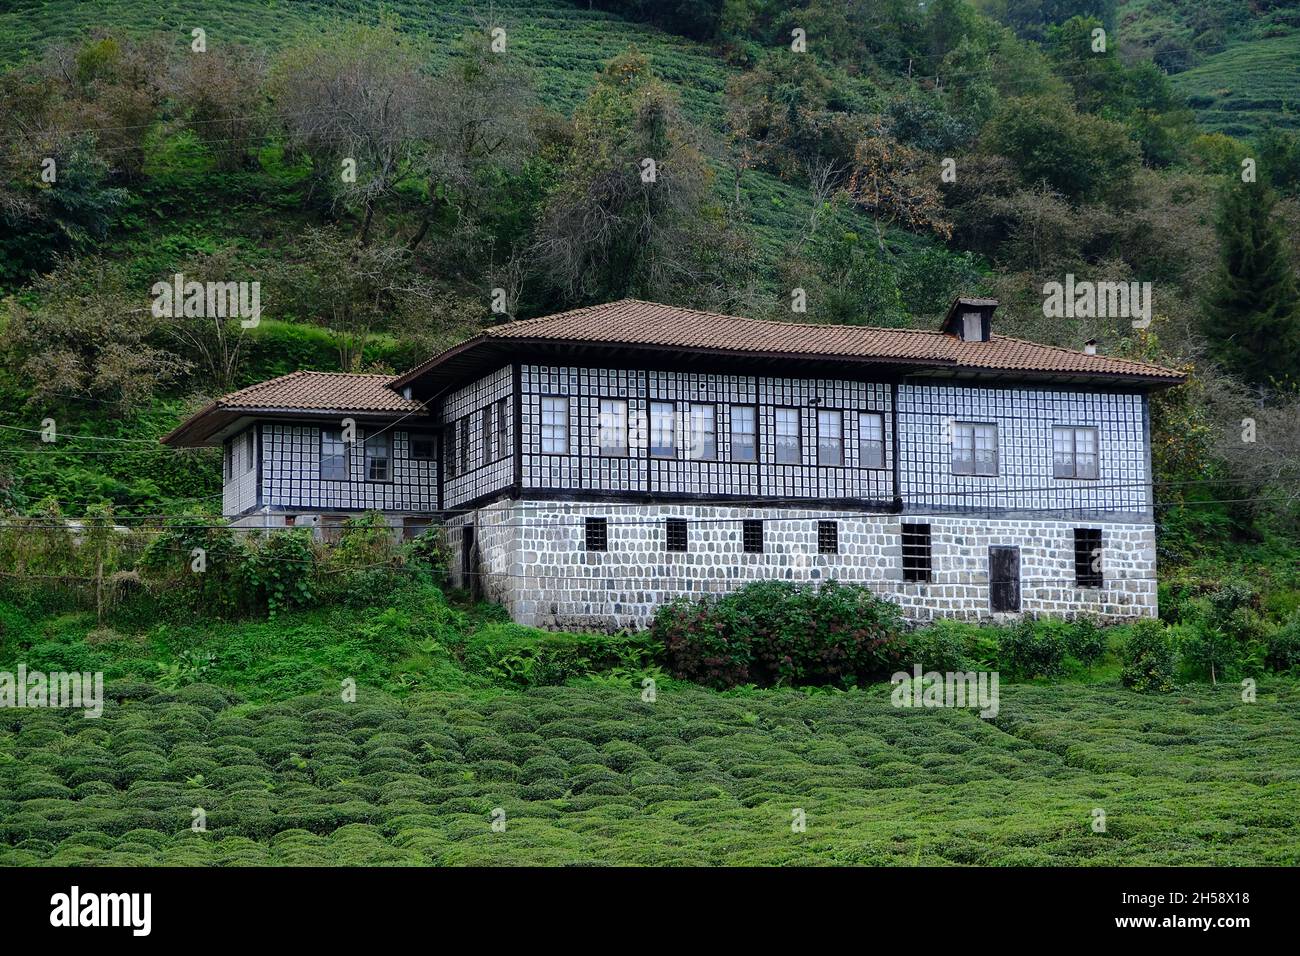 Traditional historical houses in the Çağlayan neighborhood of Artvin province, Fındıklı district. Stock Photo